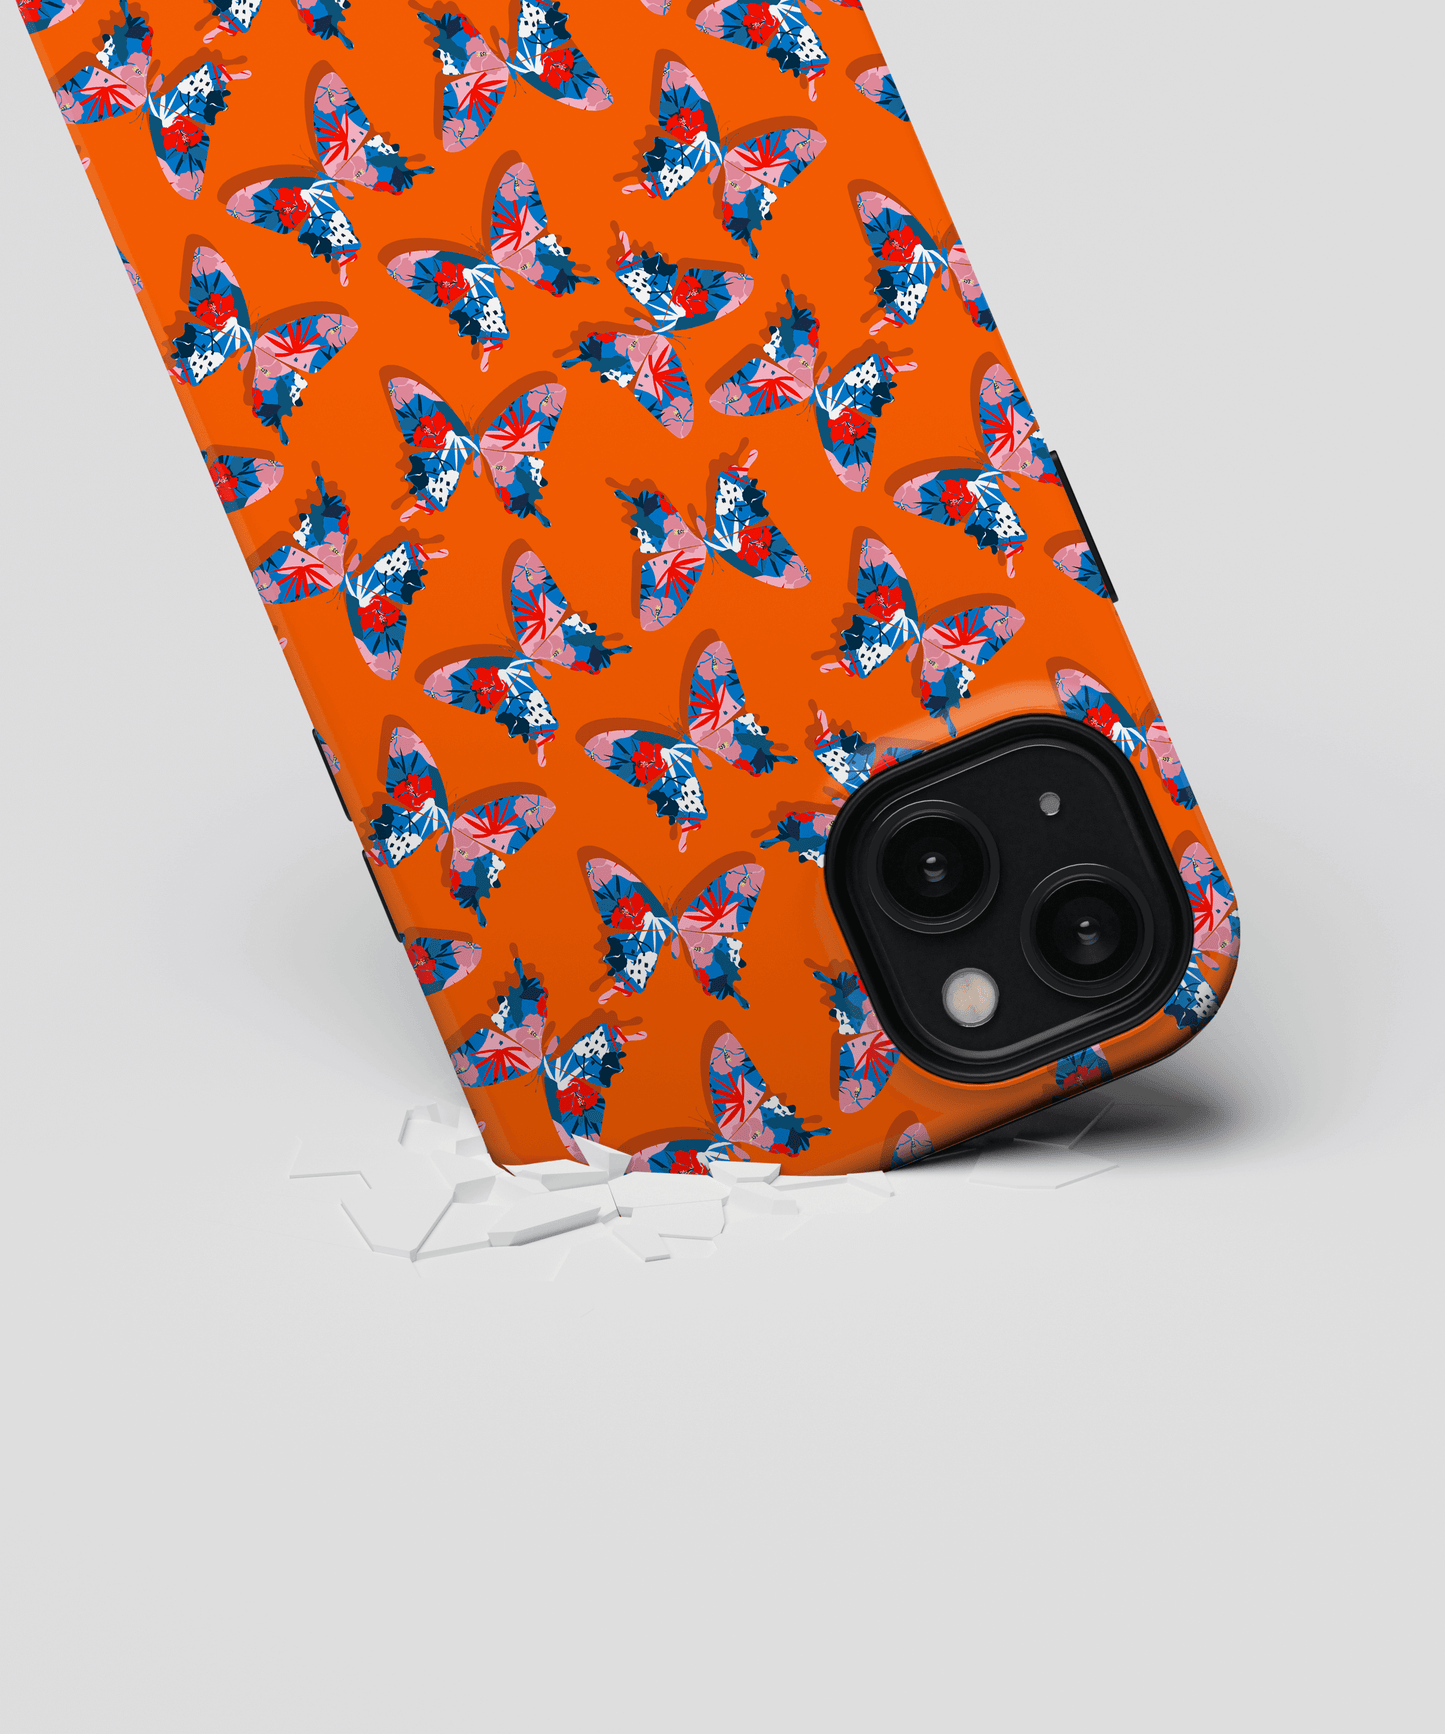 Butterbliss - Huawei P30 Pro phone case